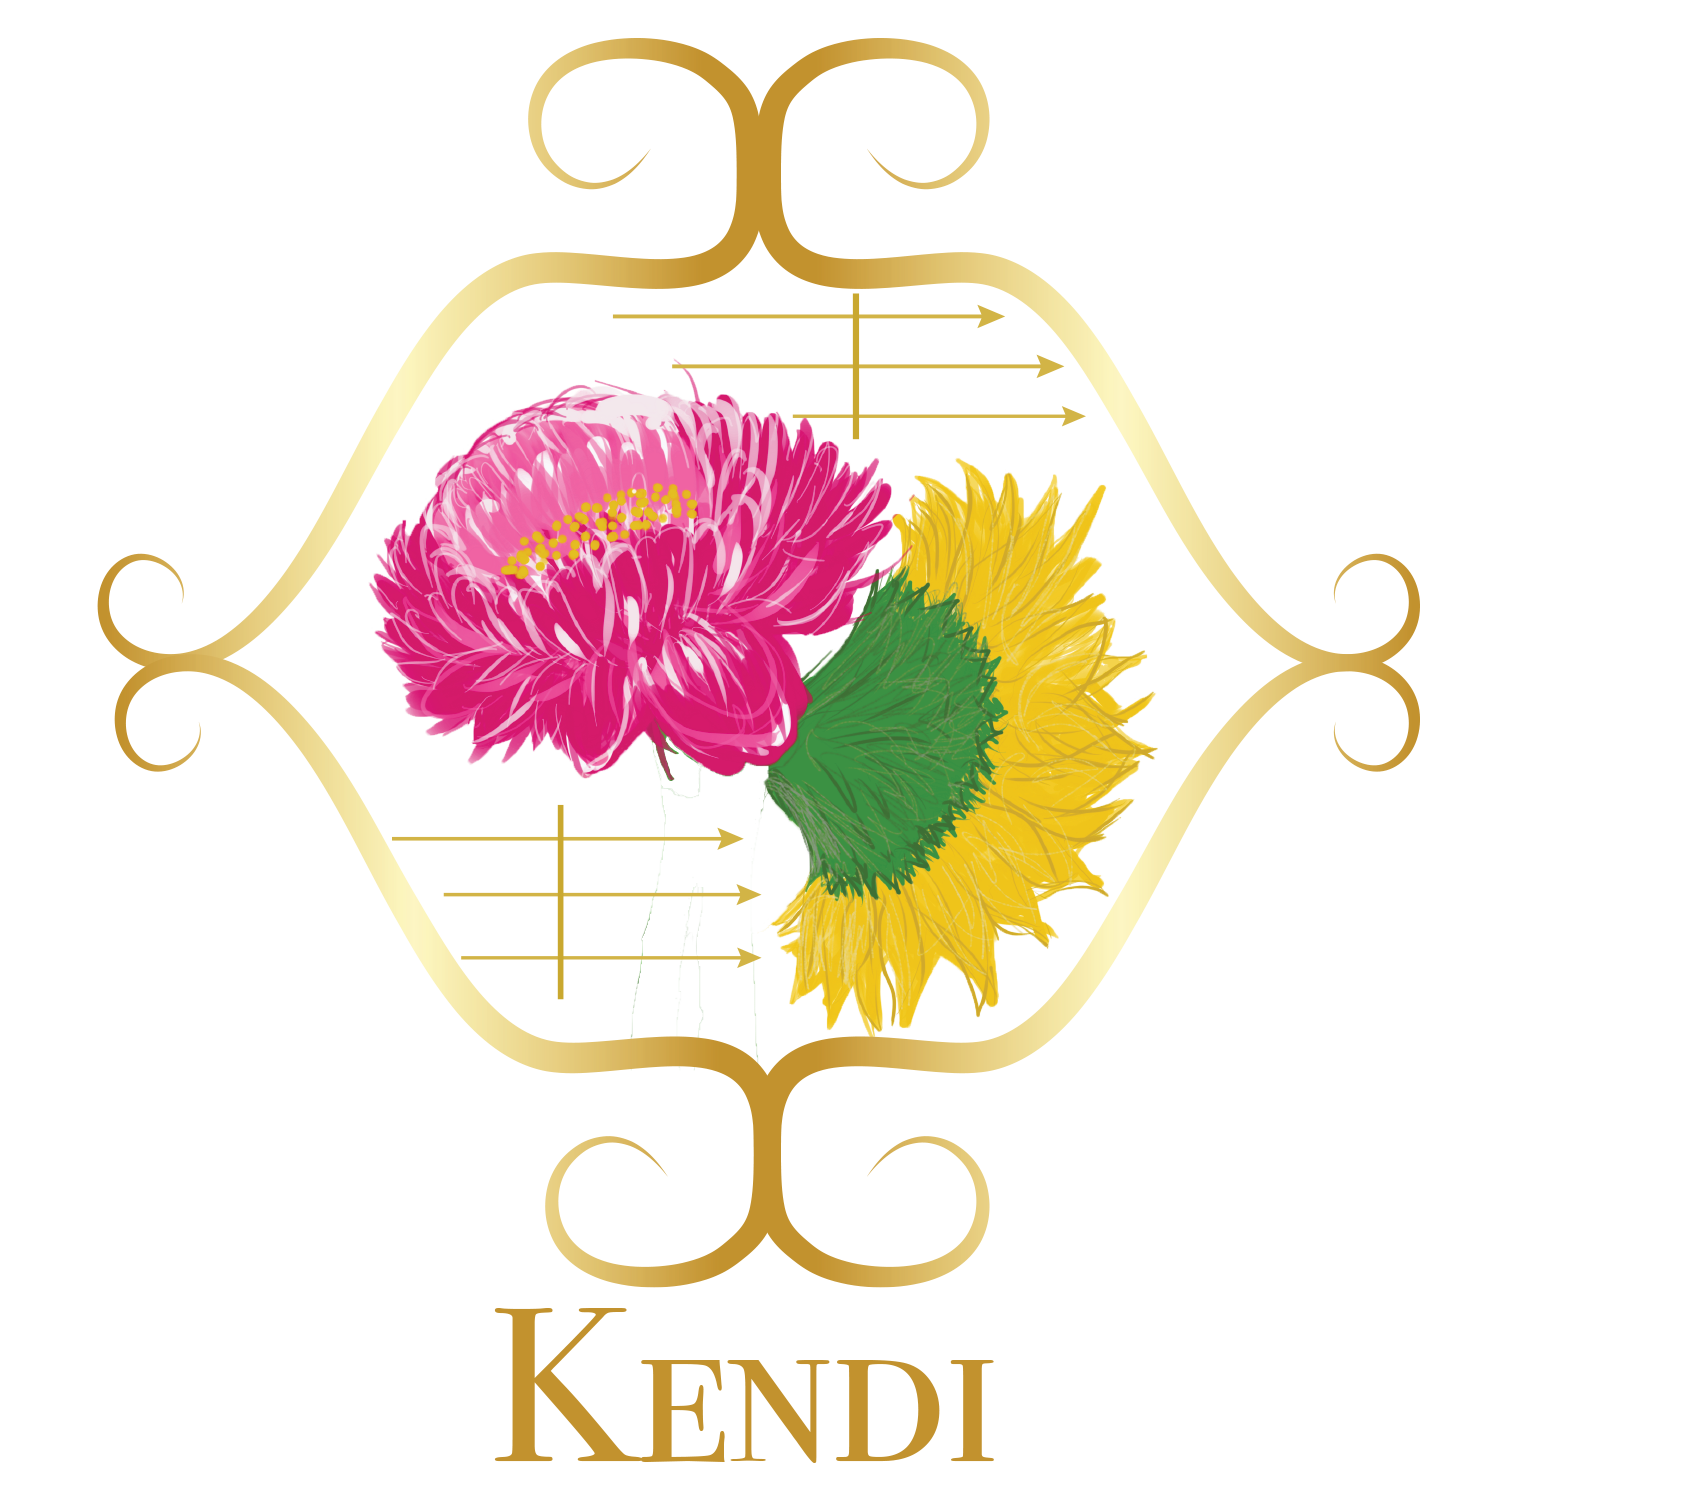 The Kendi Brand